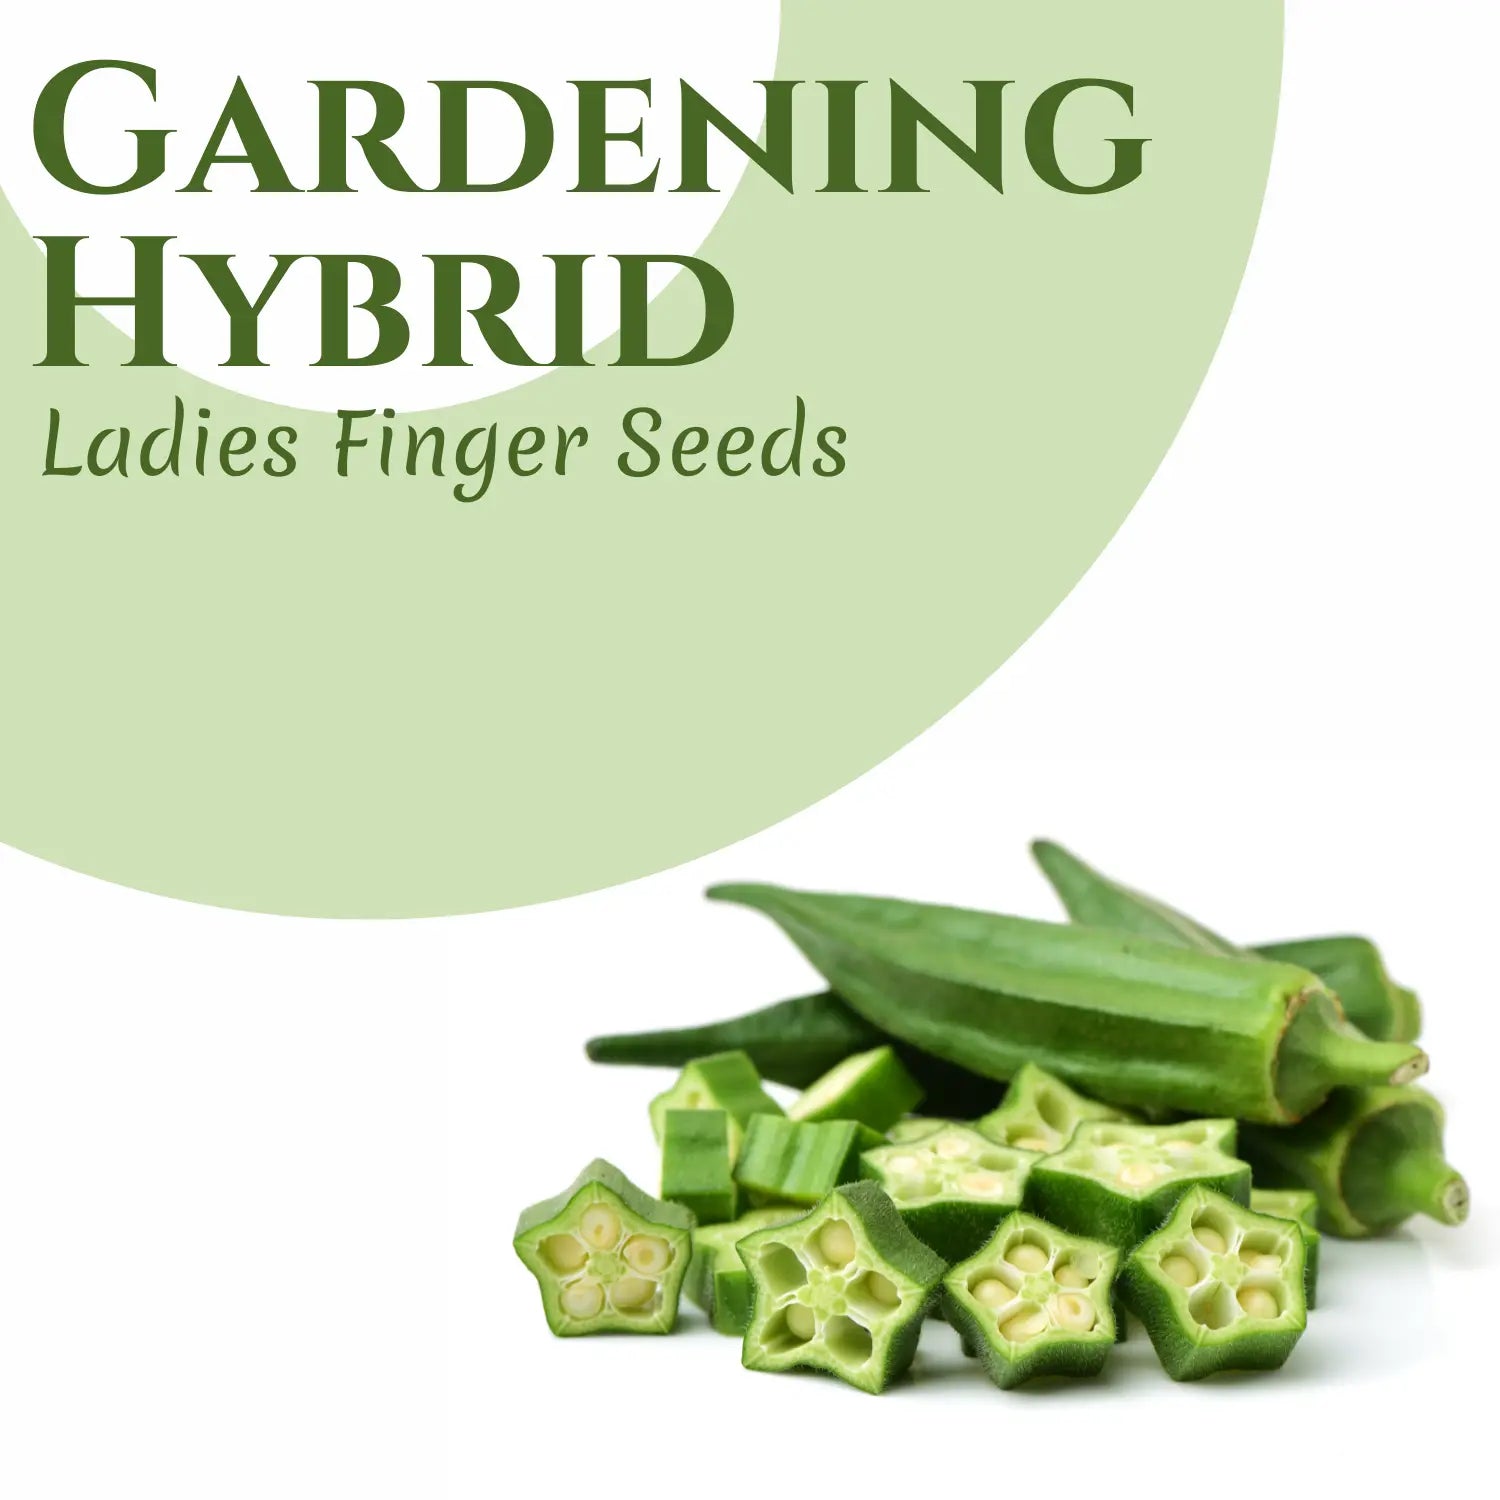 Gardening Hybrid Ladies Finger Seeds